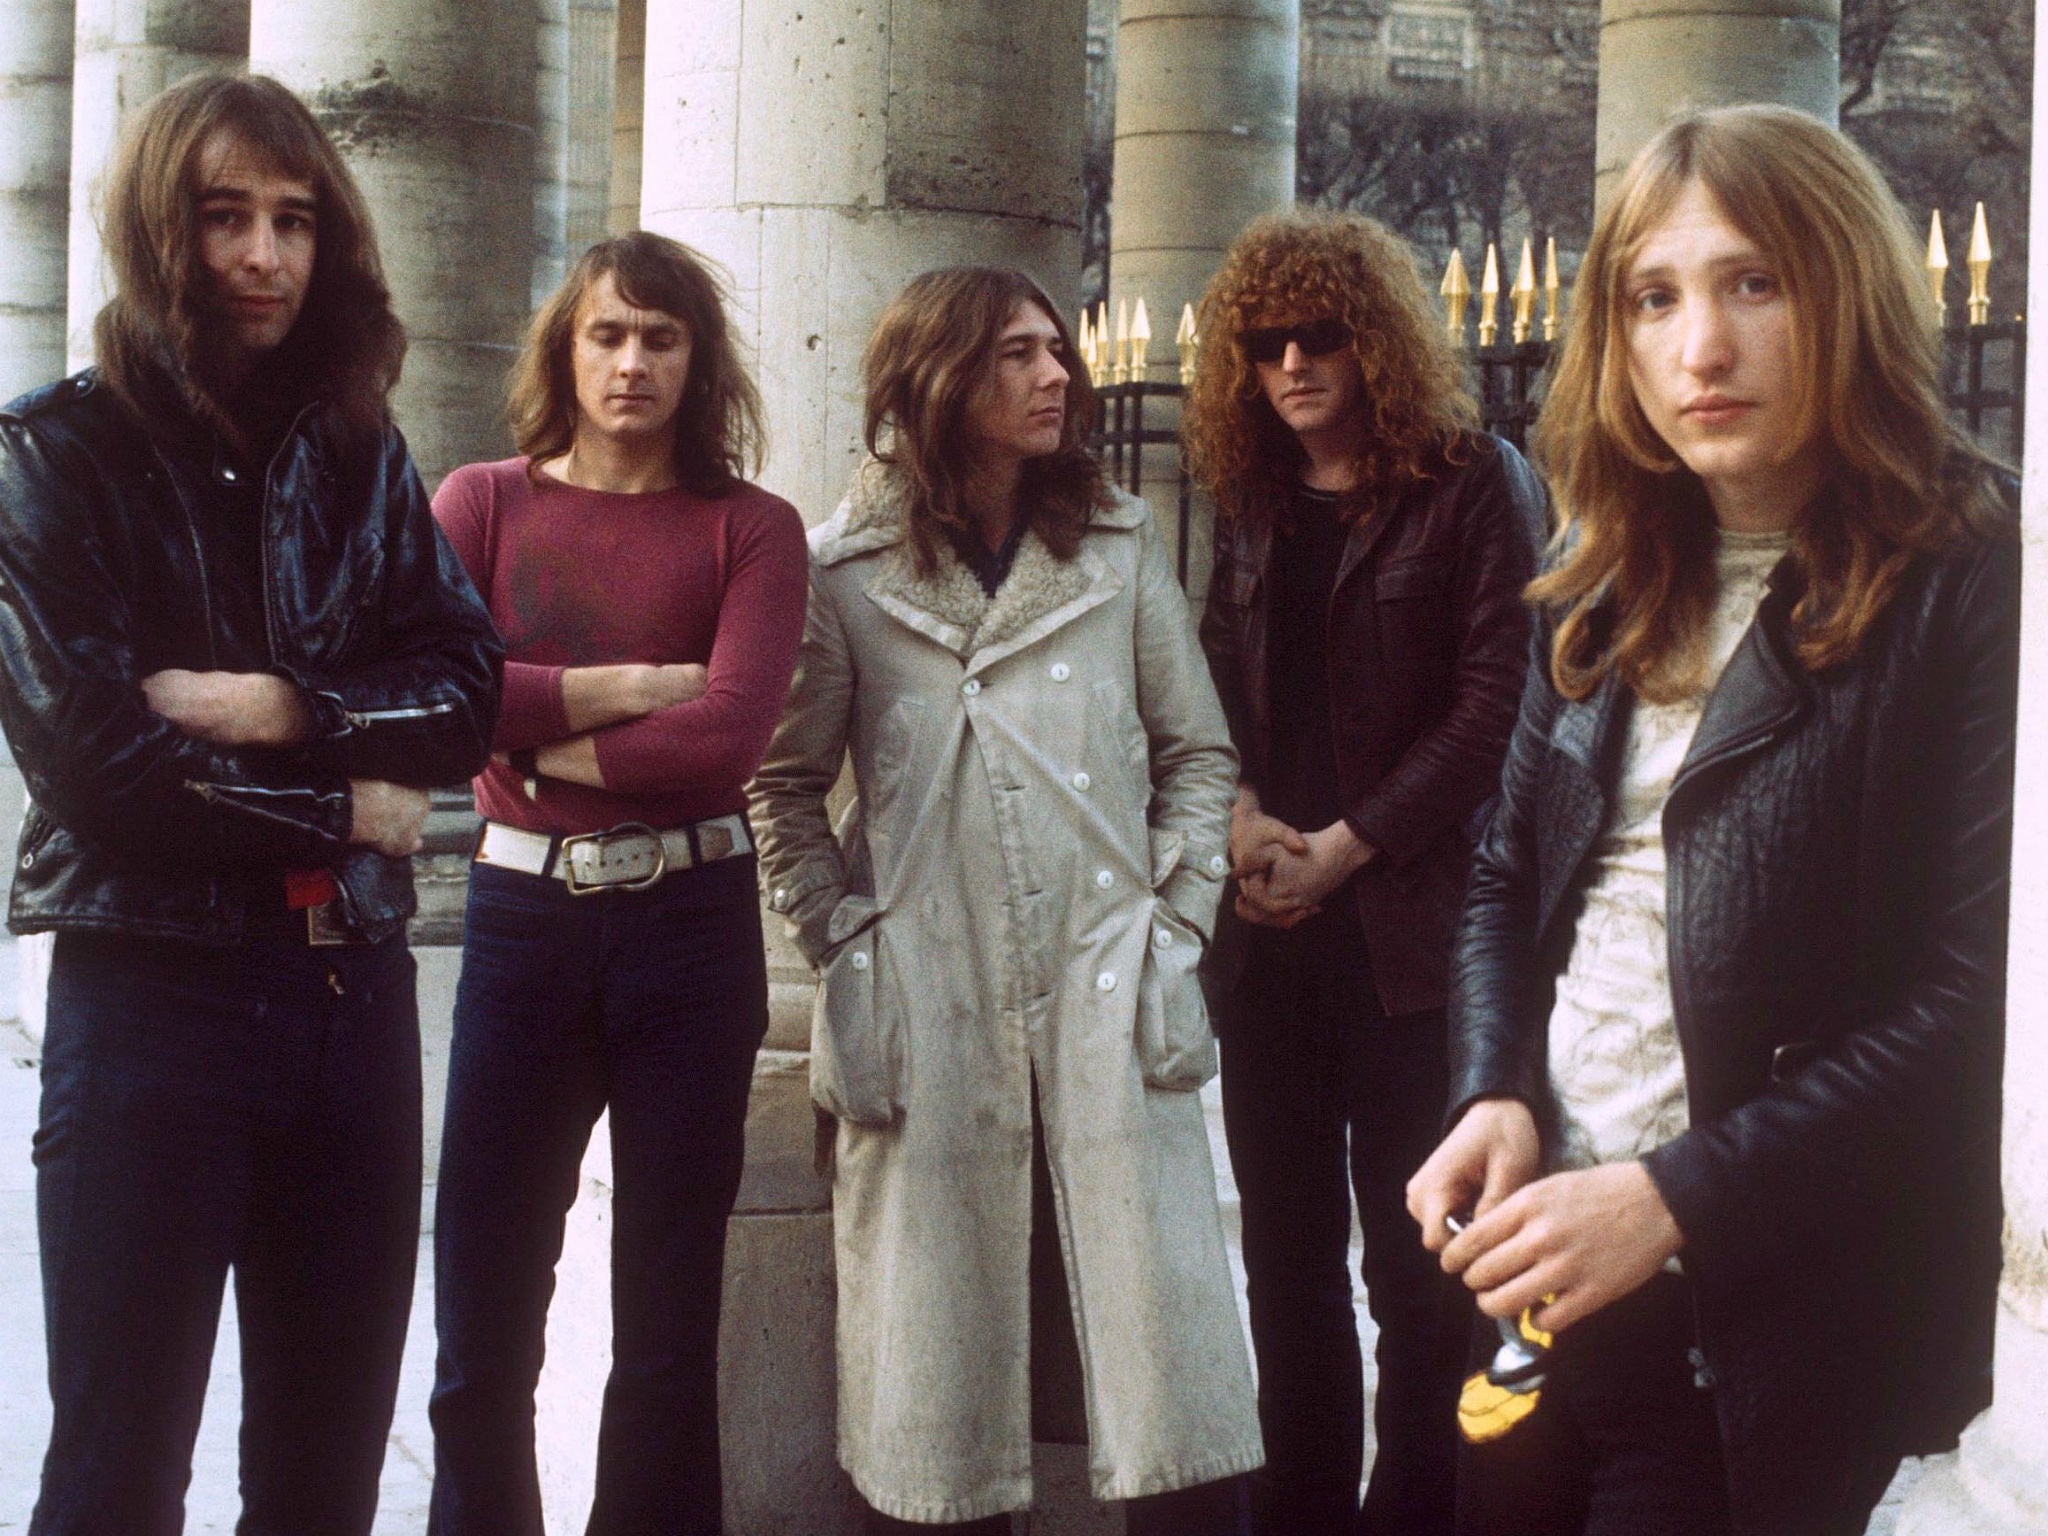 Mott the Hoople: Peter Watts, Verden Allen, Mick Ralphs, Ian Hunter and Dale Griffin (far right) in 1972